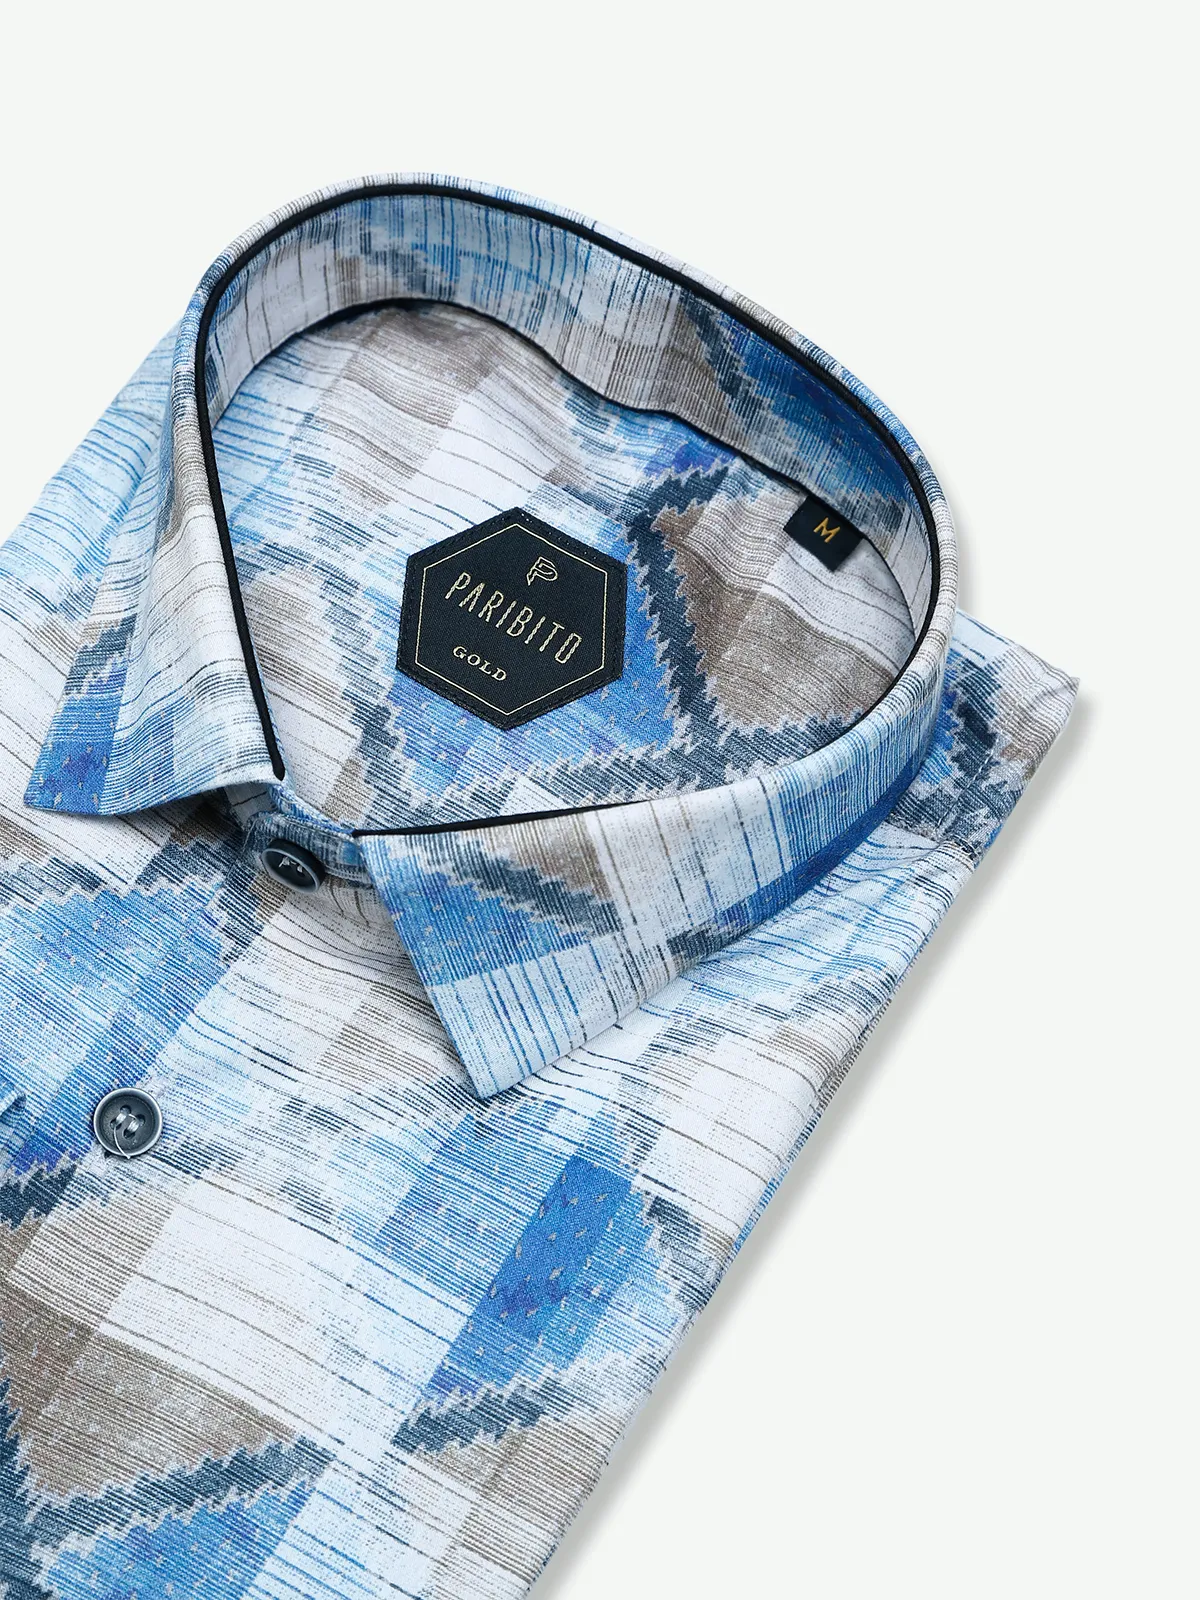 Paribito blue and white cotton printed shirt